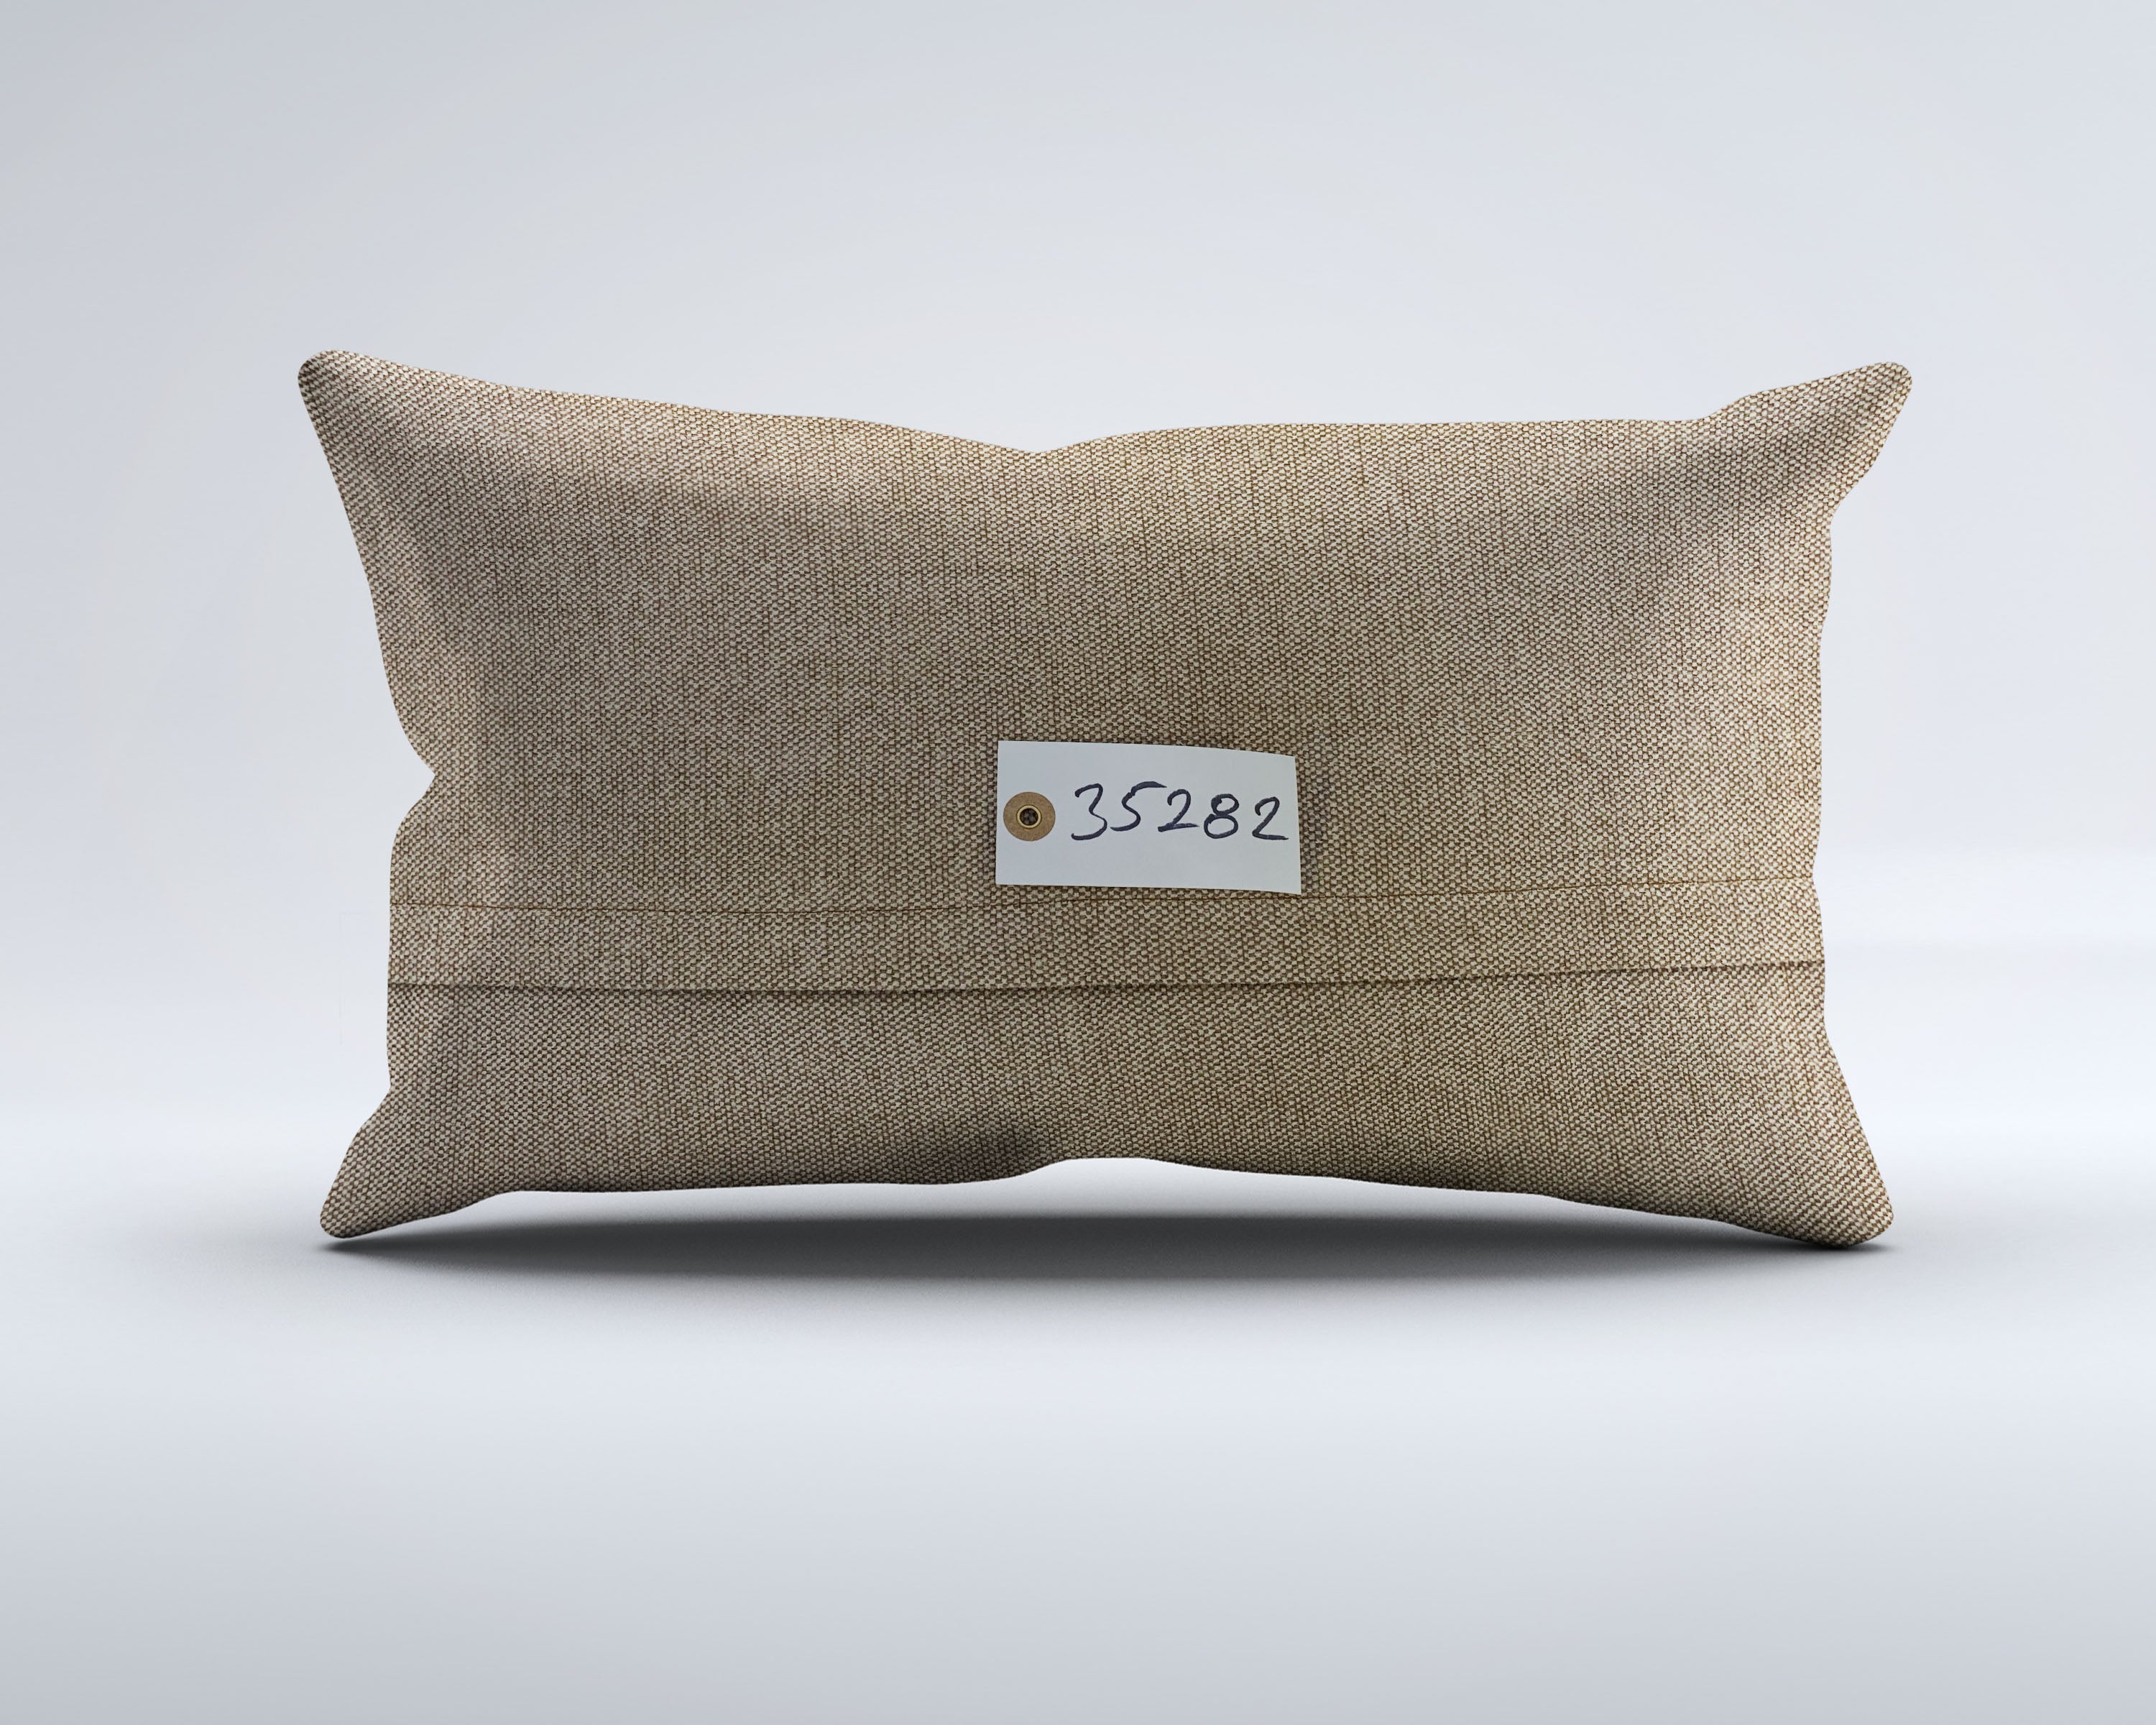 Vintage Turkish Kilim Cushion Cover 30x50 cm Lumbar Wool Kelim Pillowcase 35282